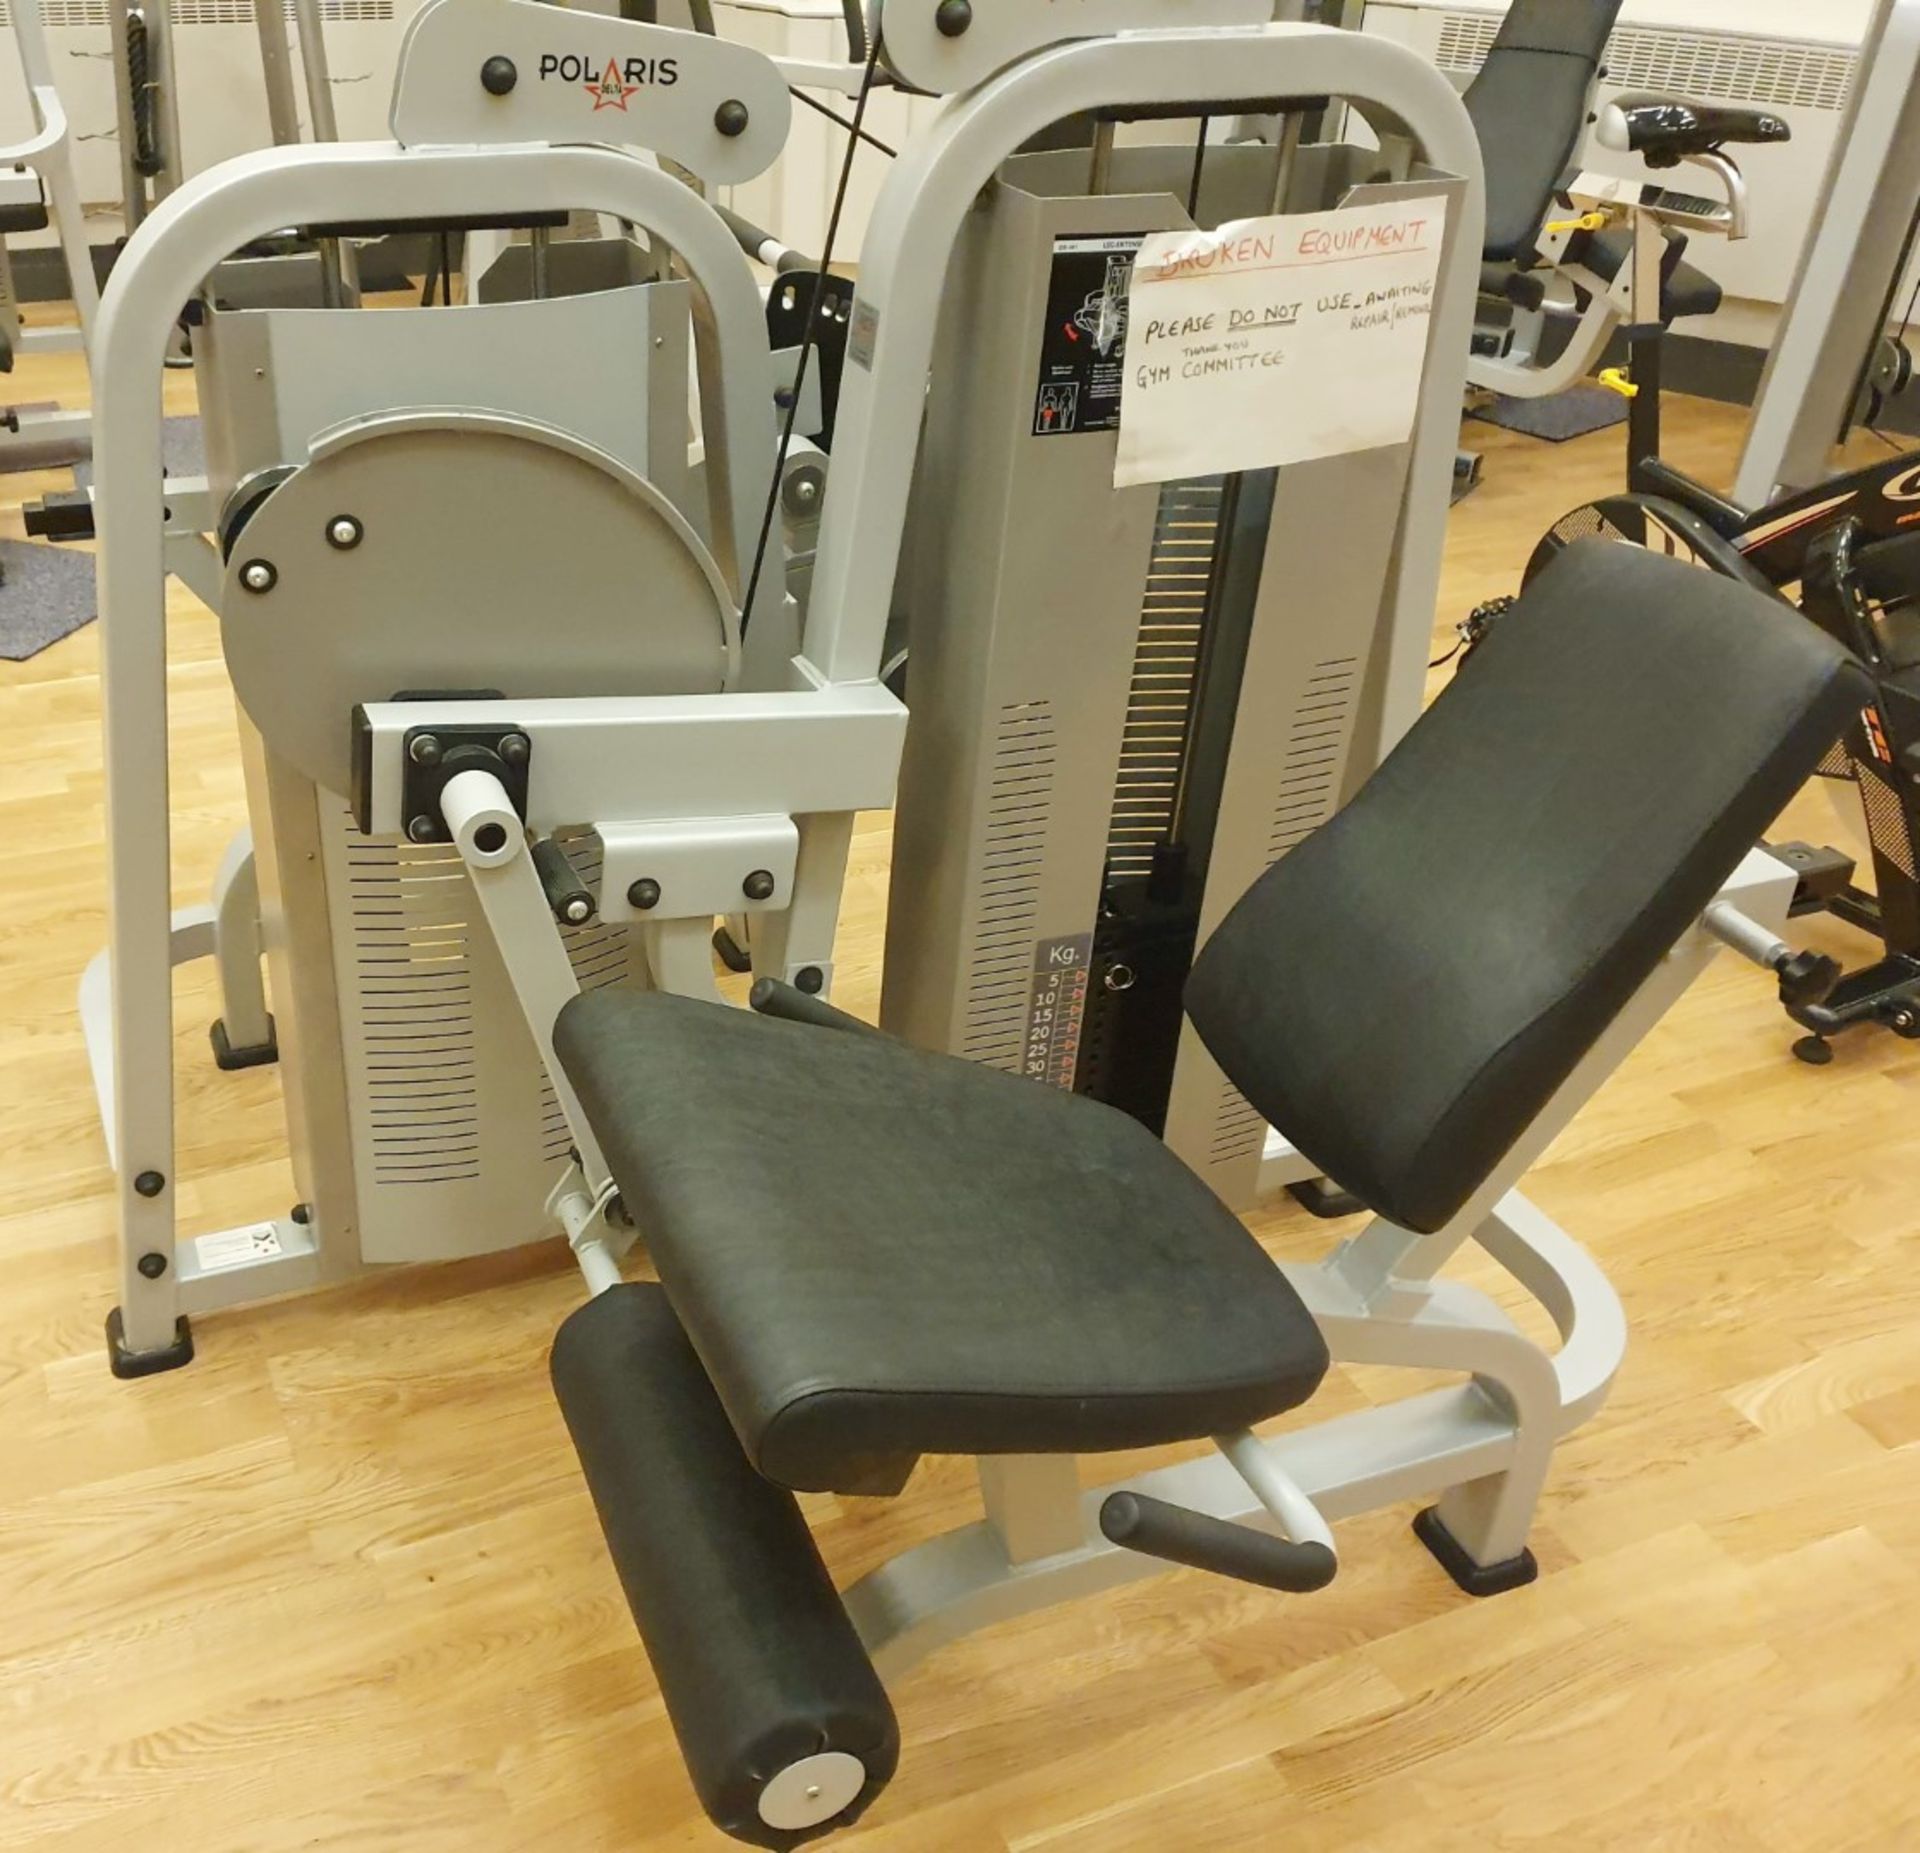 1 x Polaris DE-201 Seated Leg Extension Commercial Gym Machine - CL552 - Location: West YorkshireThe - Image 3 of 3